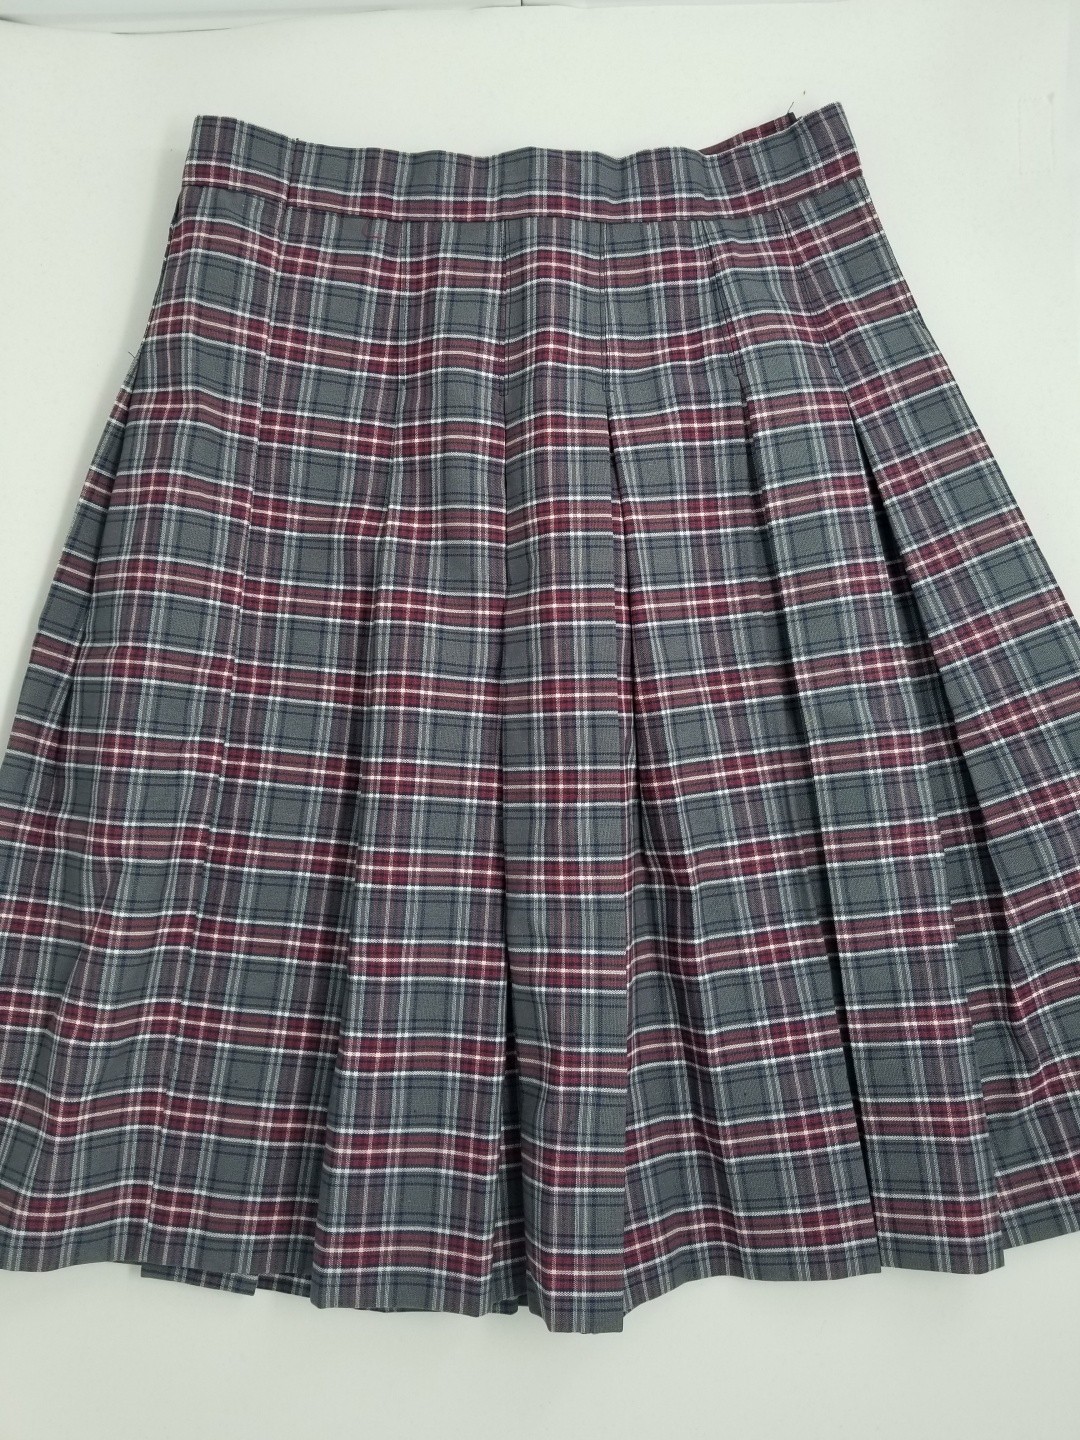 Stitch Down Pleat Skirt- Style 11 - Skirts - Girls